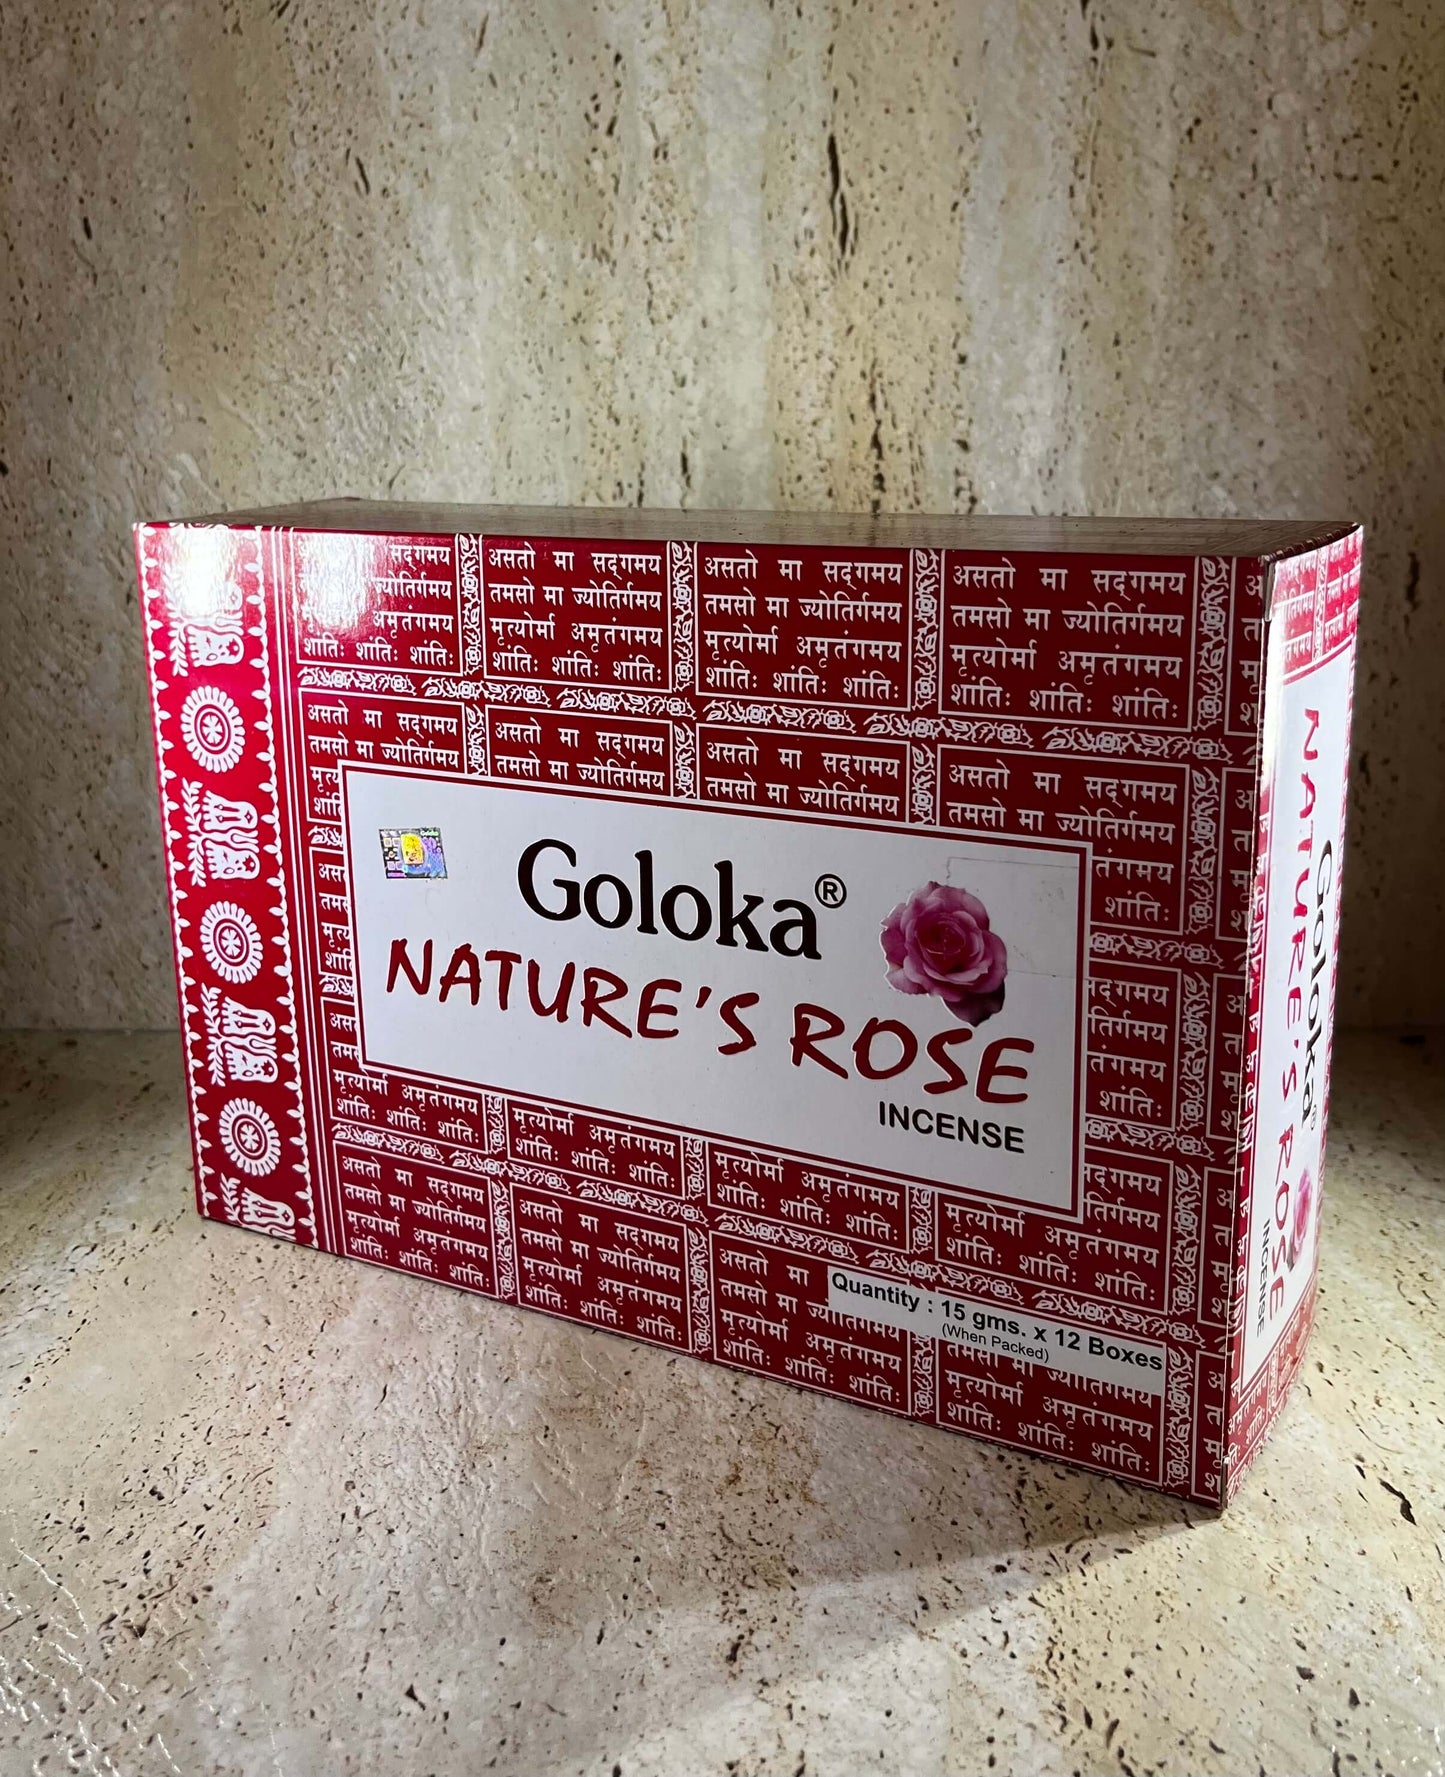 Goloka Nature's Rose incense